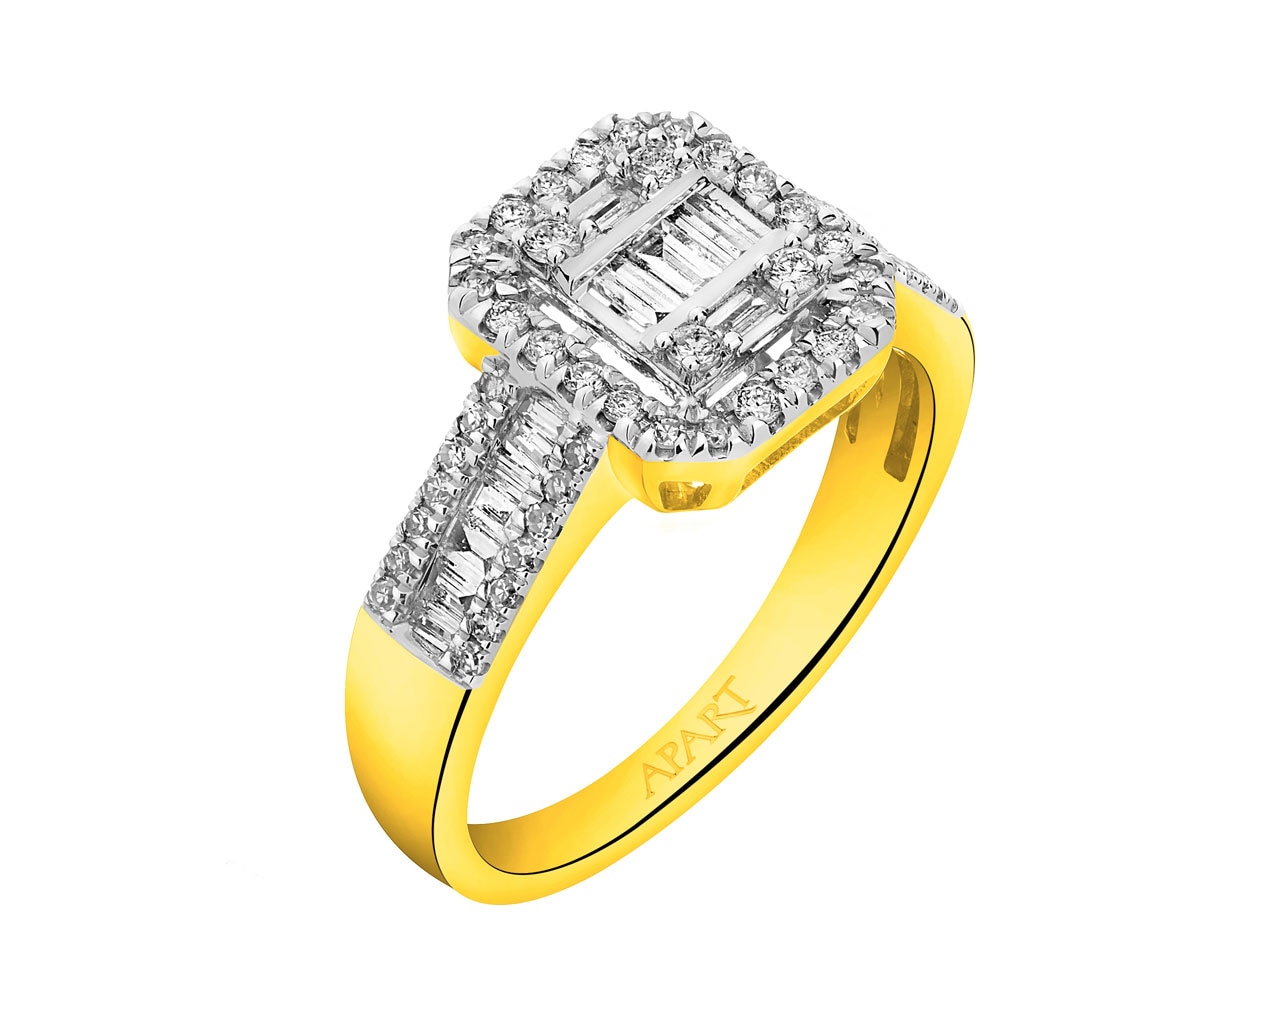 Zlatý prsten s diamanty 0,51 ct - ryzost 585